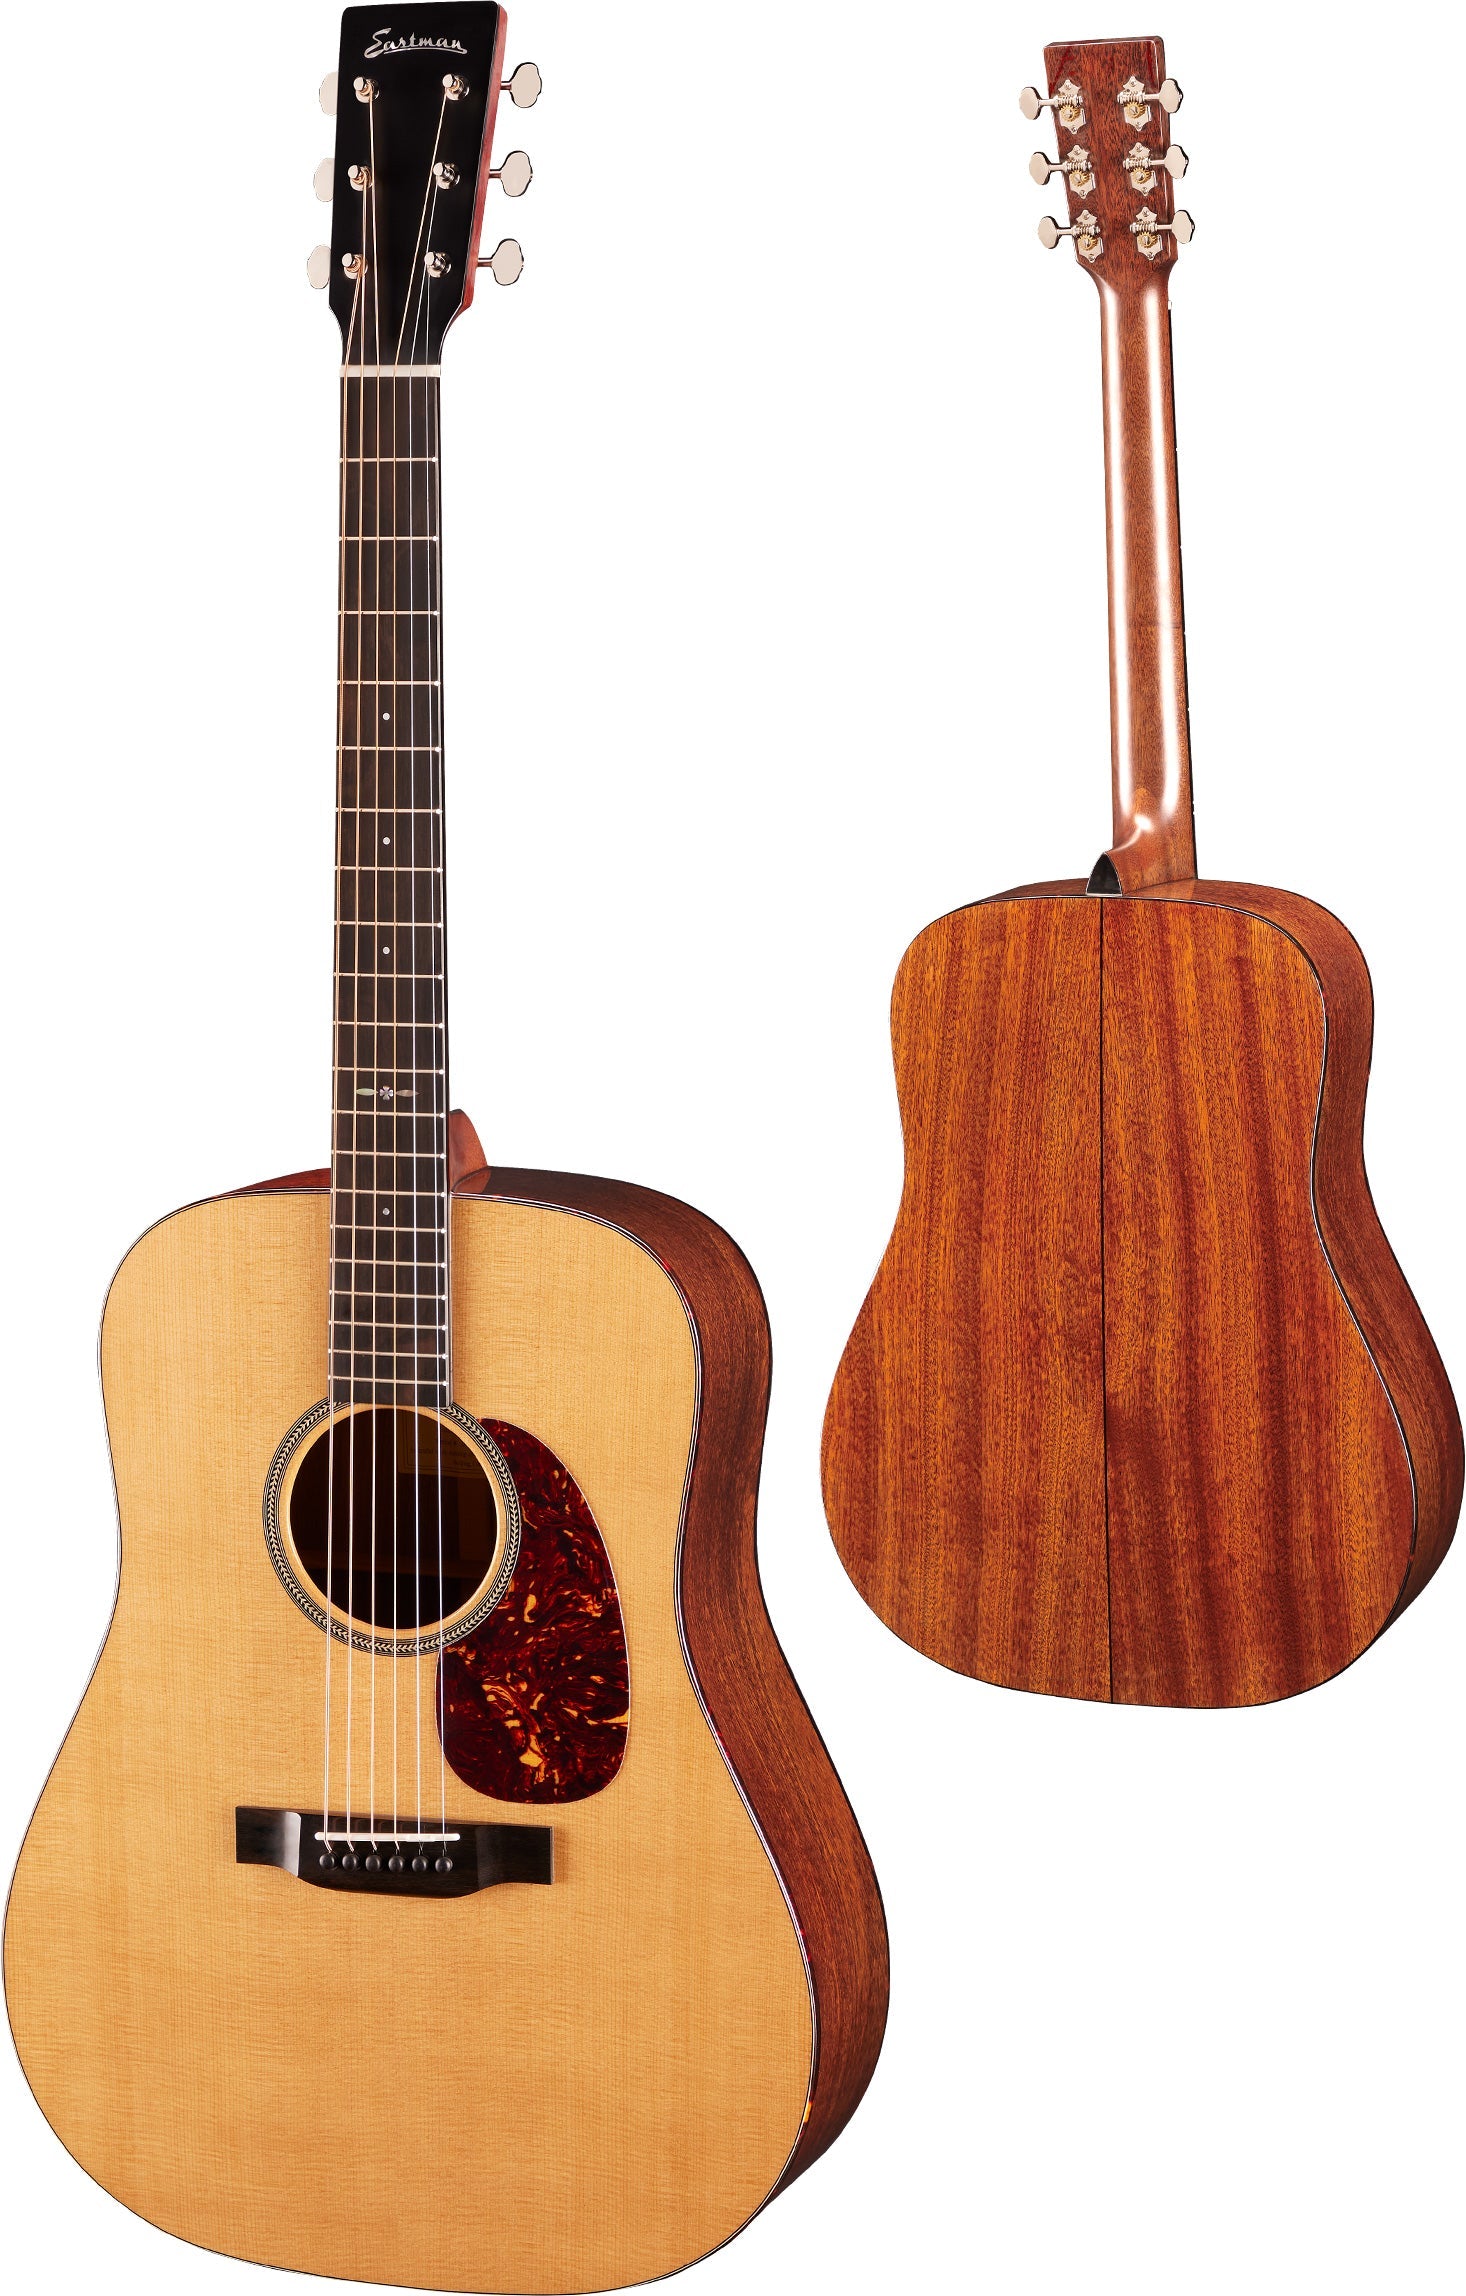 Eastman E1D-SPECIAL, natural, Acoustic Guitar, Acoustic Guitar for sale at Richards Guitars.